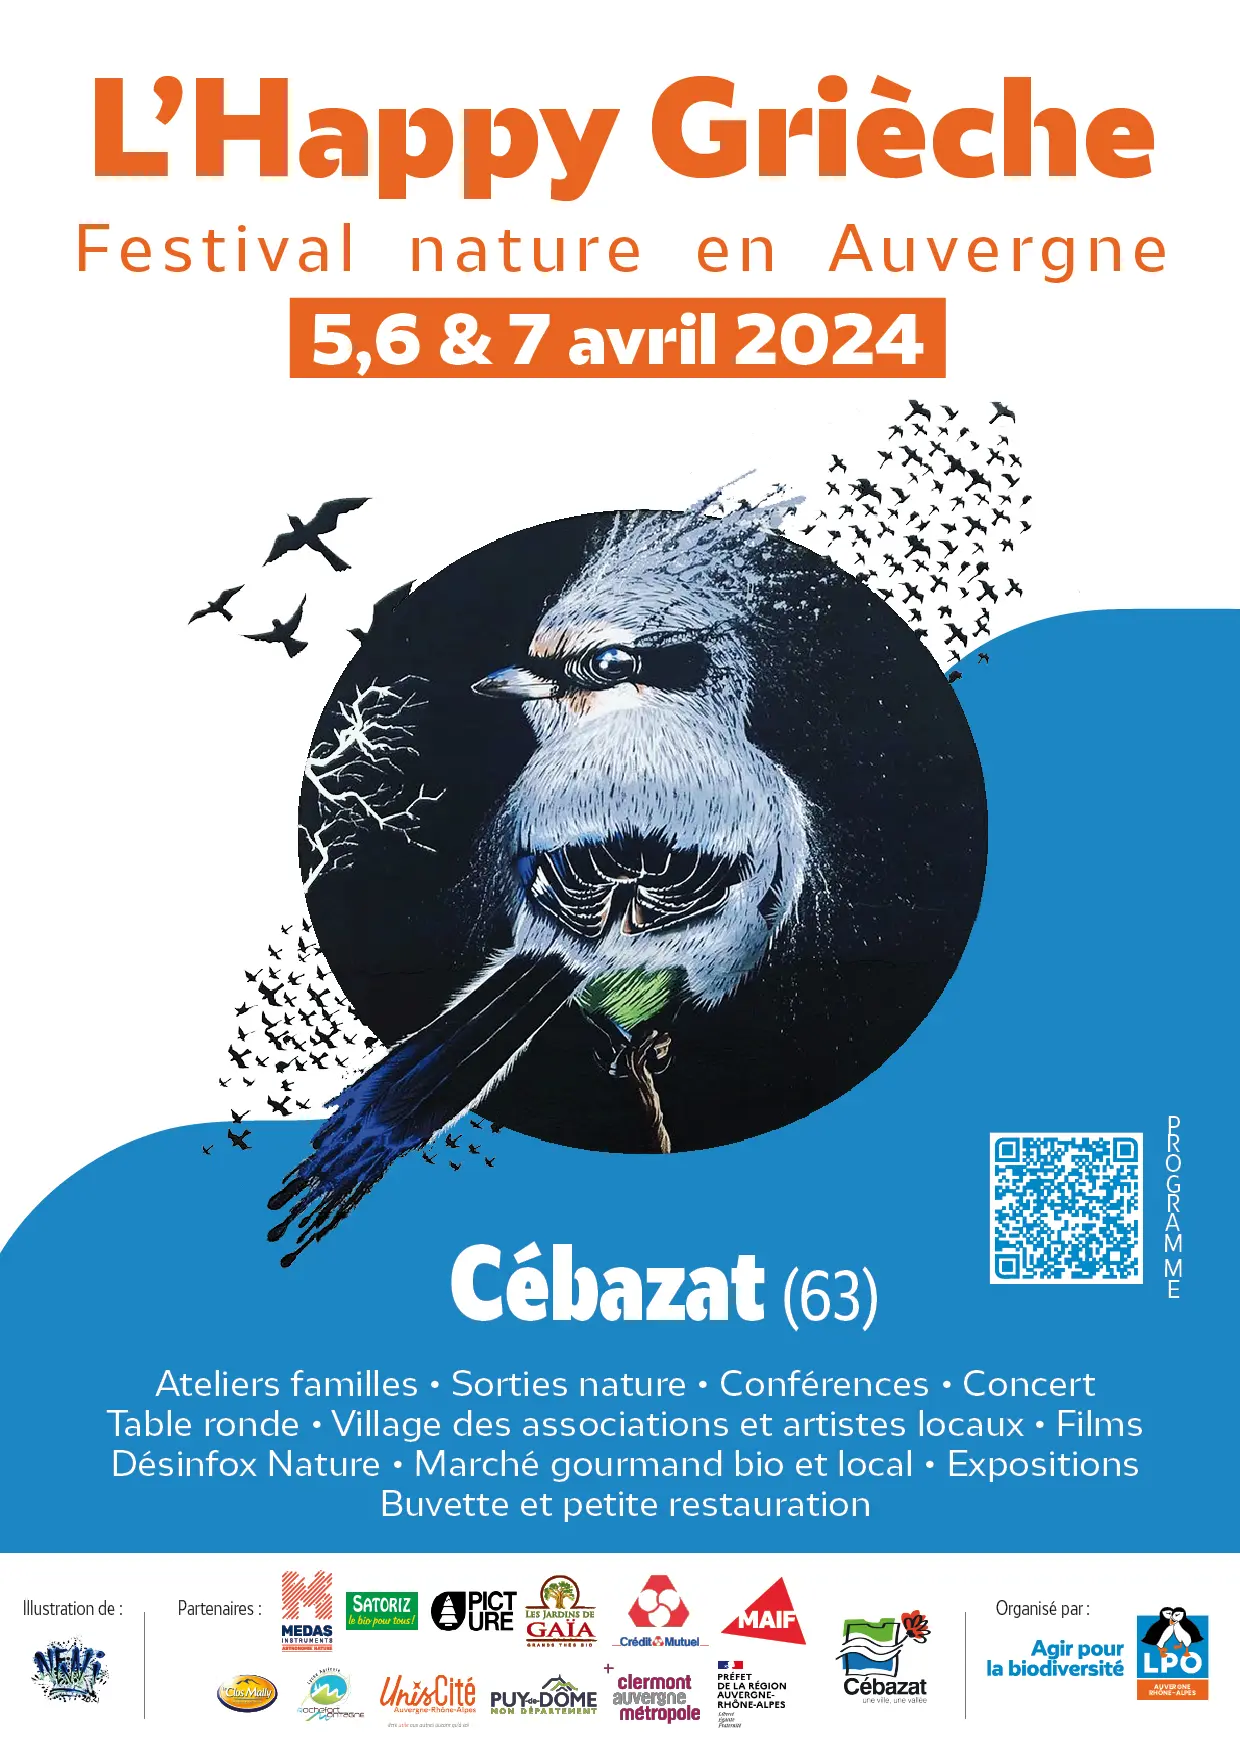 Conférence le 6 avril à Cébazat (63)